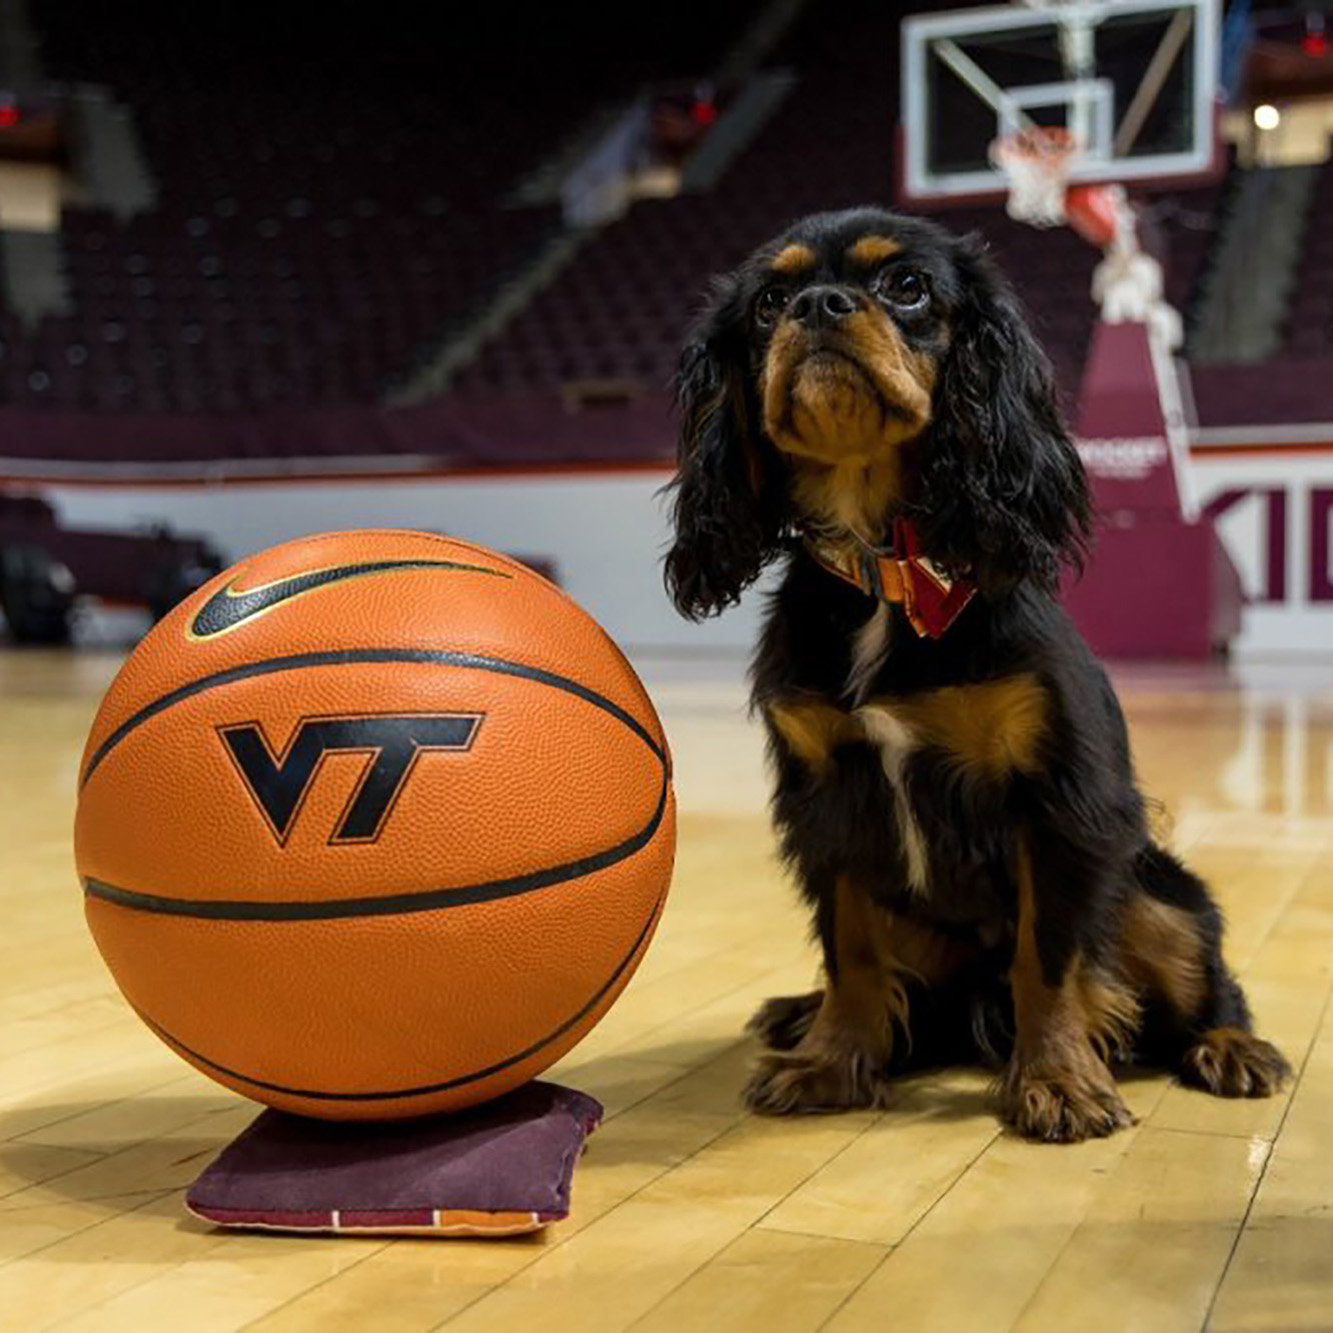 Dog sitting beside a basketball on a basketball court.